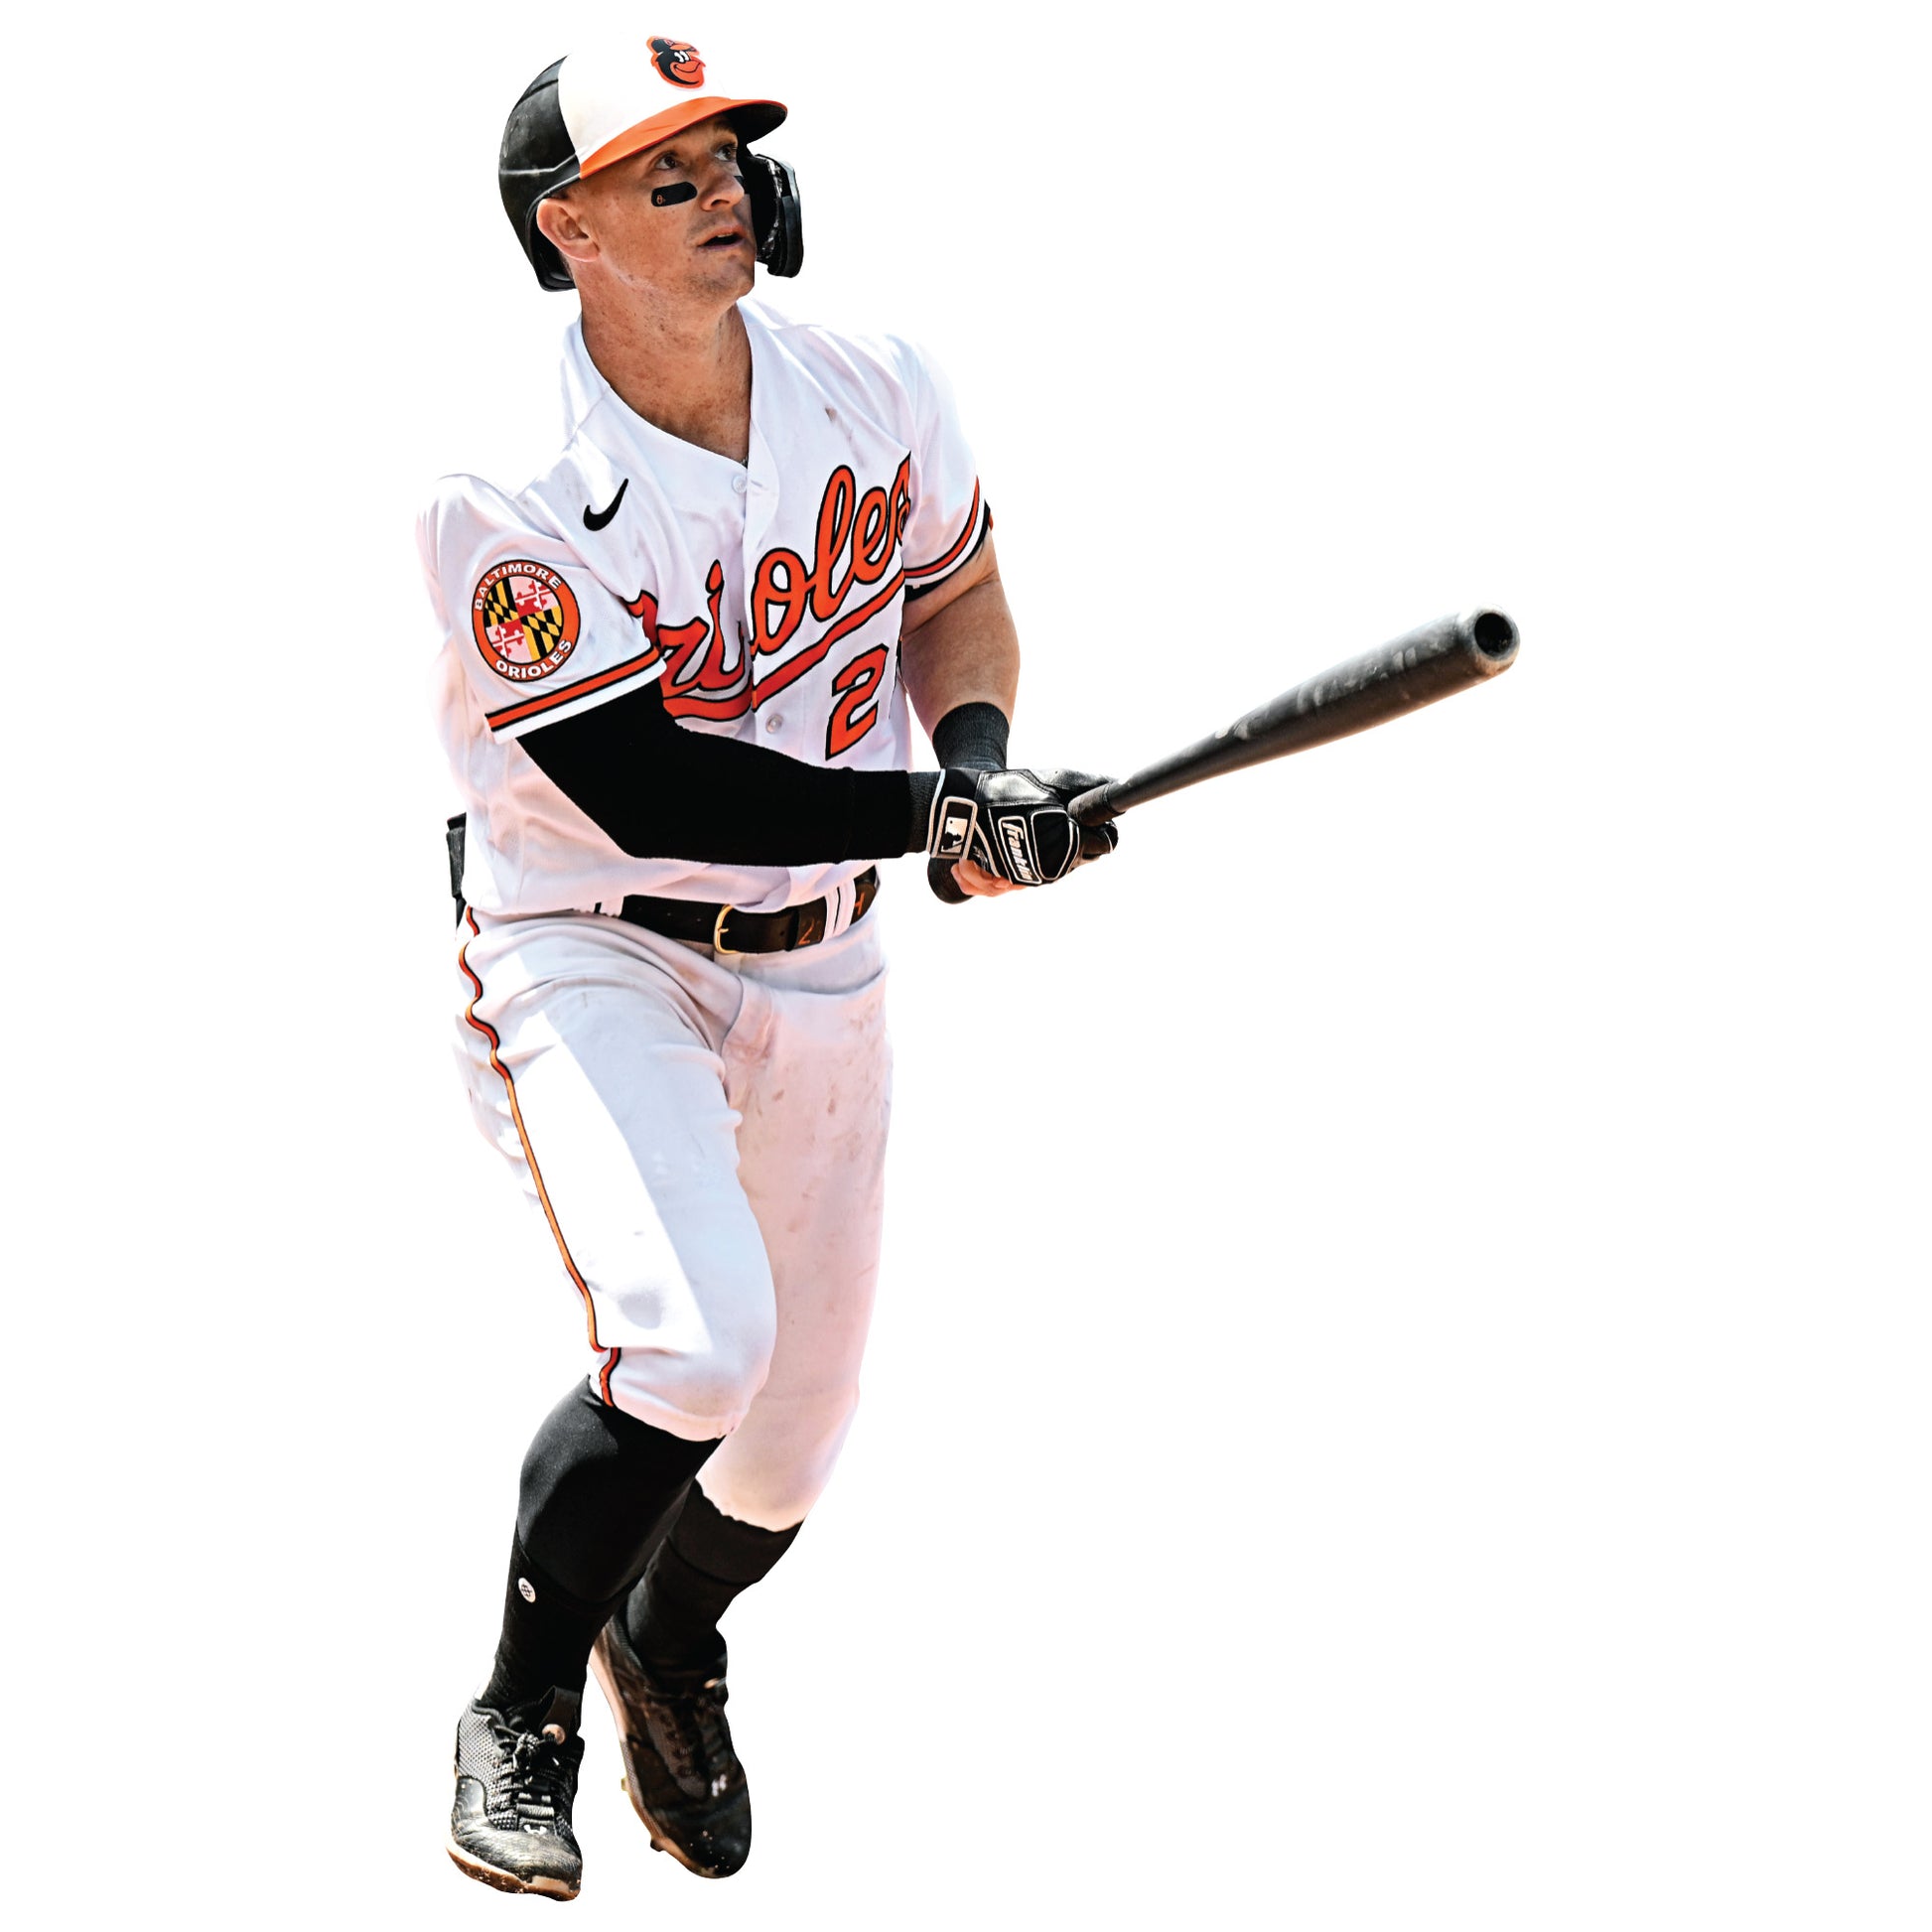 Baltimore Orioles MLB Baseball Decal Sticker